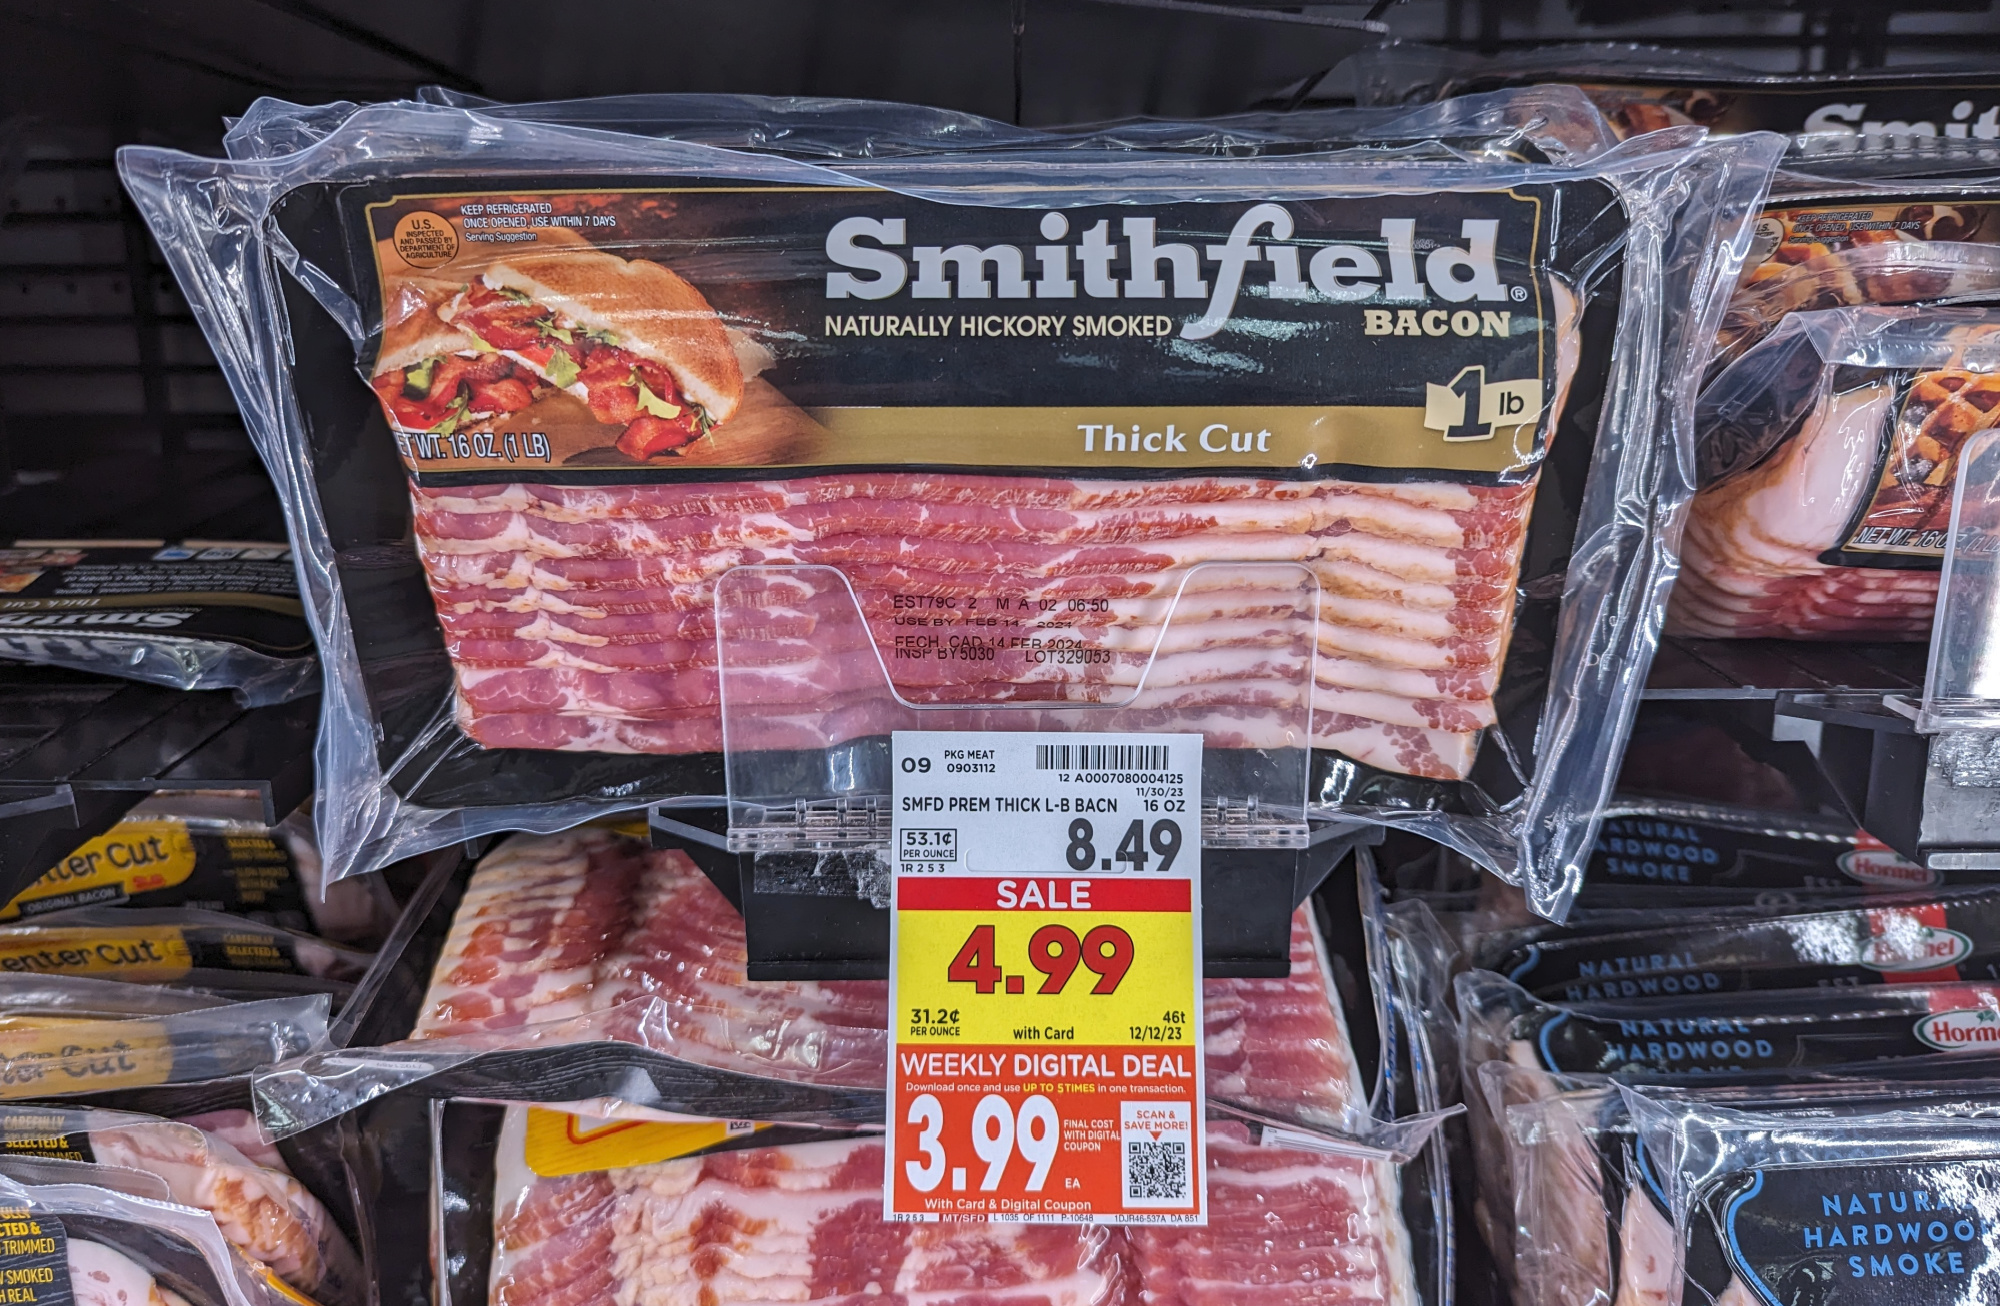 Smithfield Bacon Only $3.99 At Kroger (Regular Price $8.49)